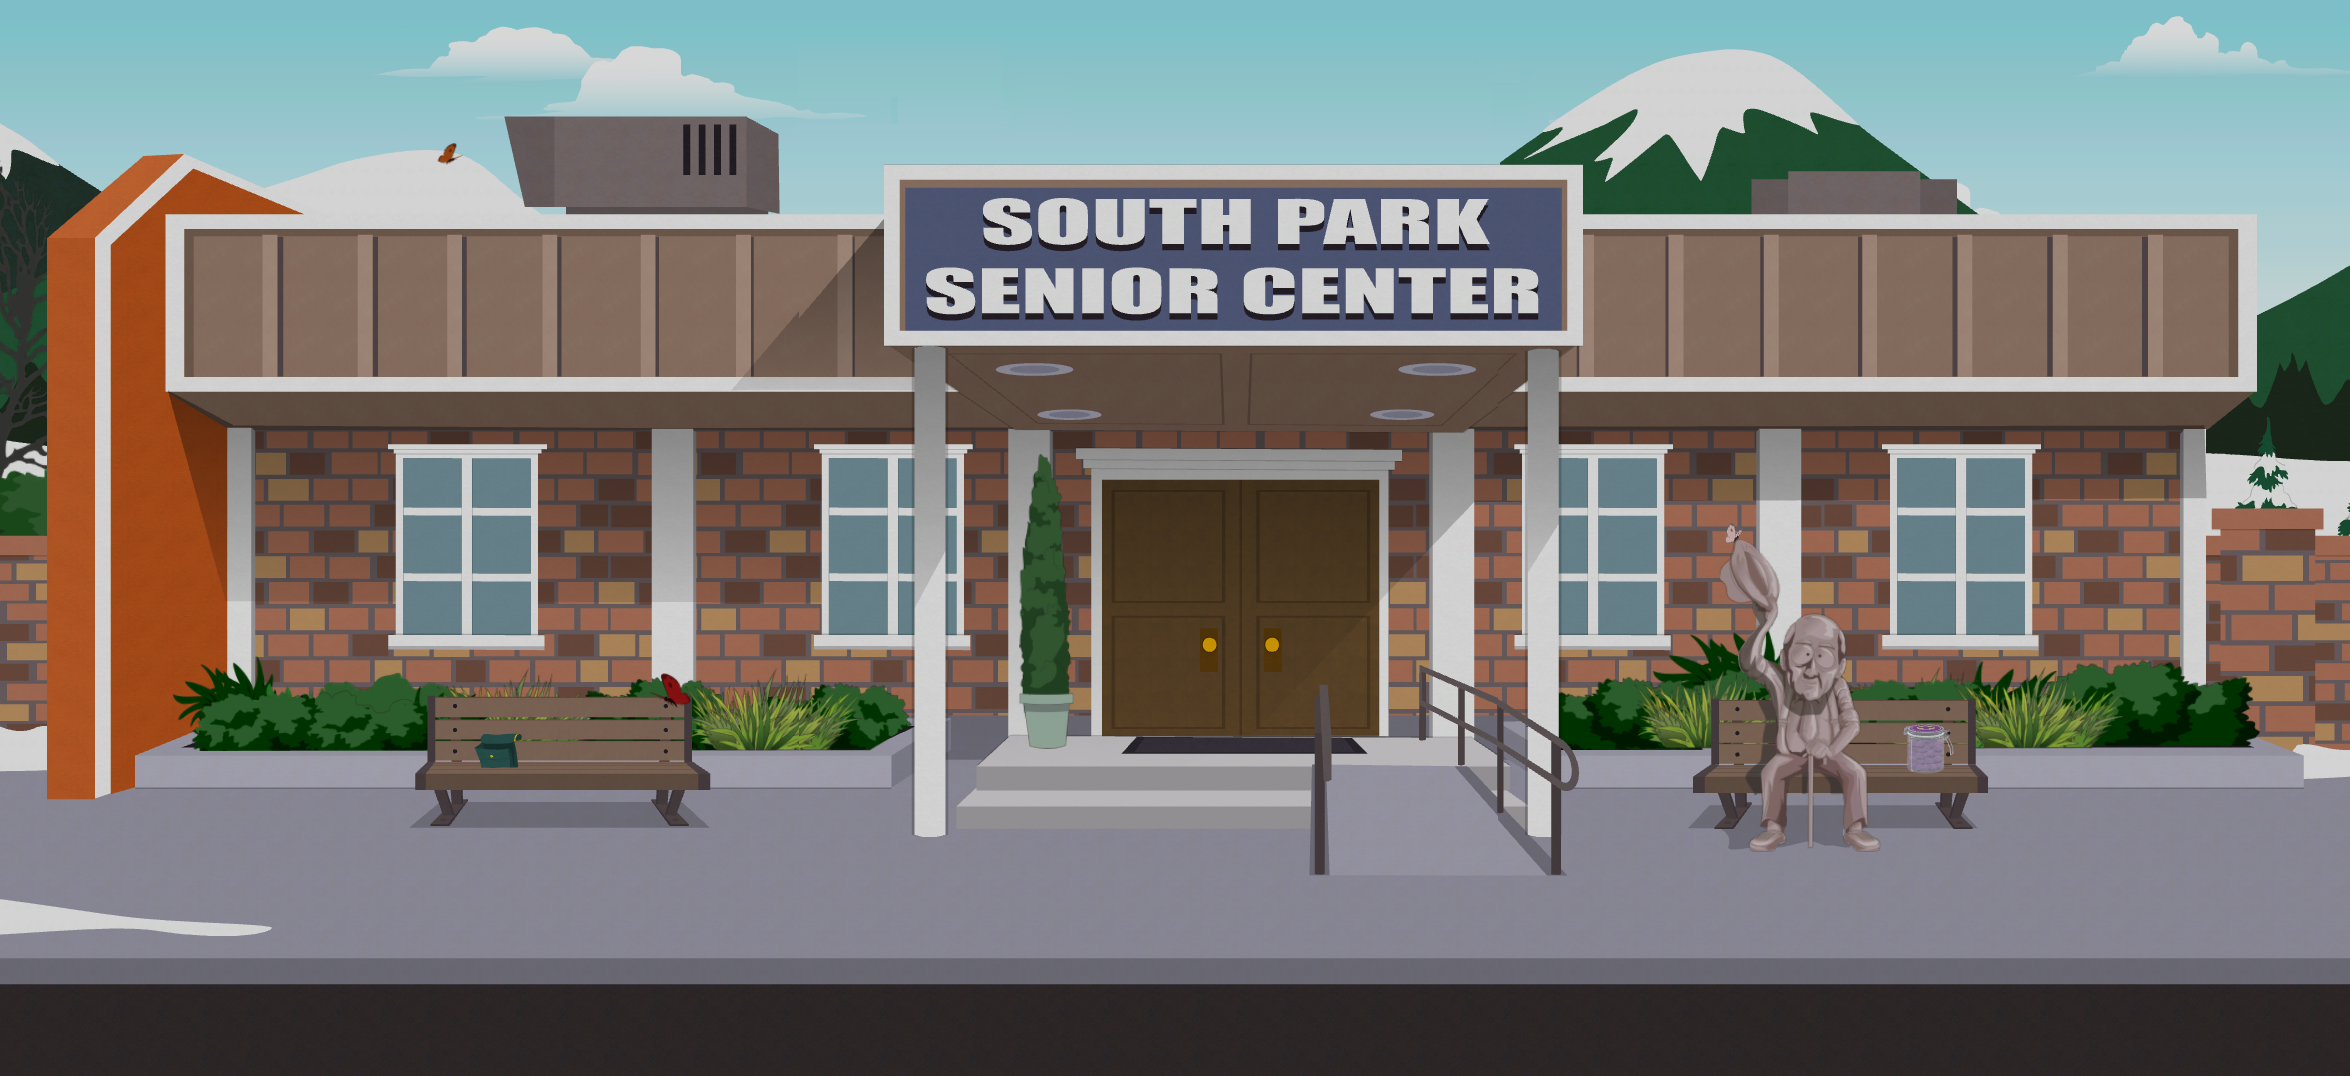 South Park Senior Center | South Park Archives | Fandom